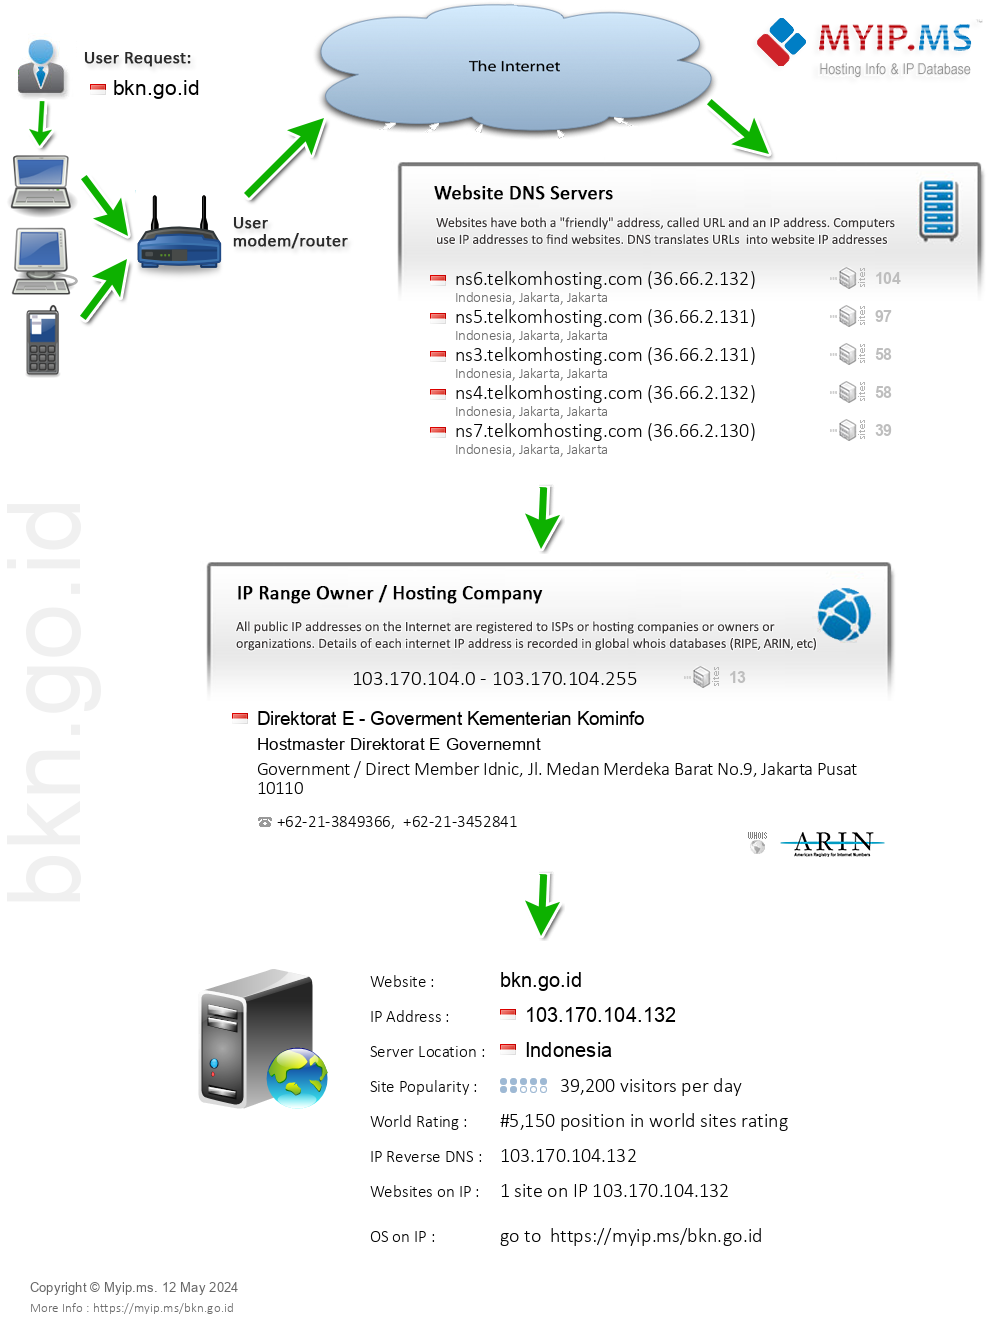 Bkn.go.id - Website Hosting Visual IP Diagram